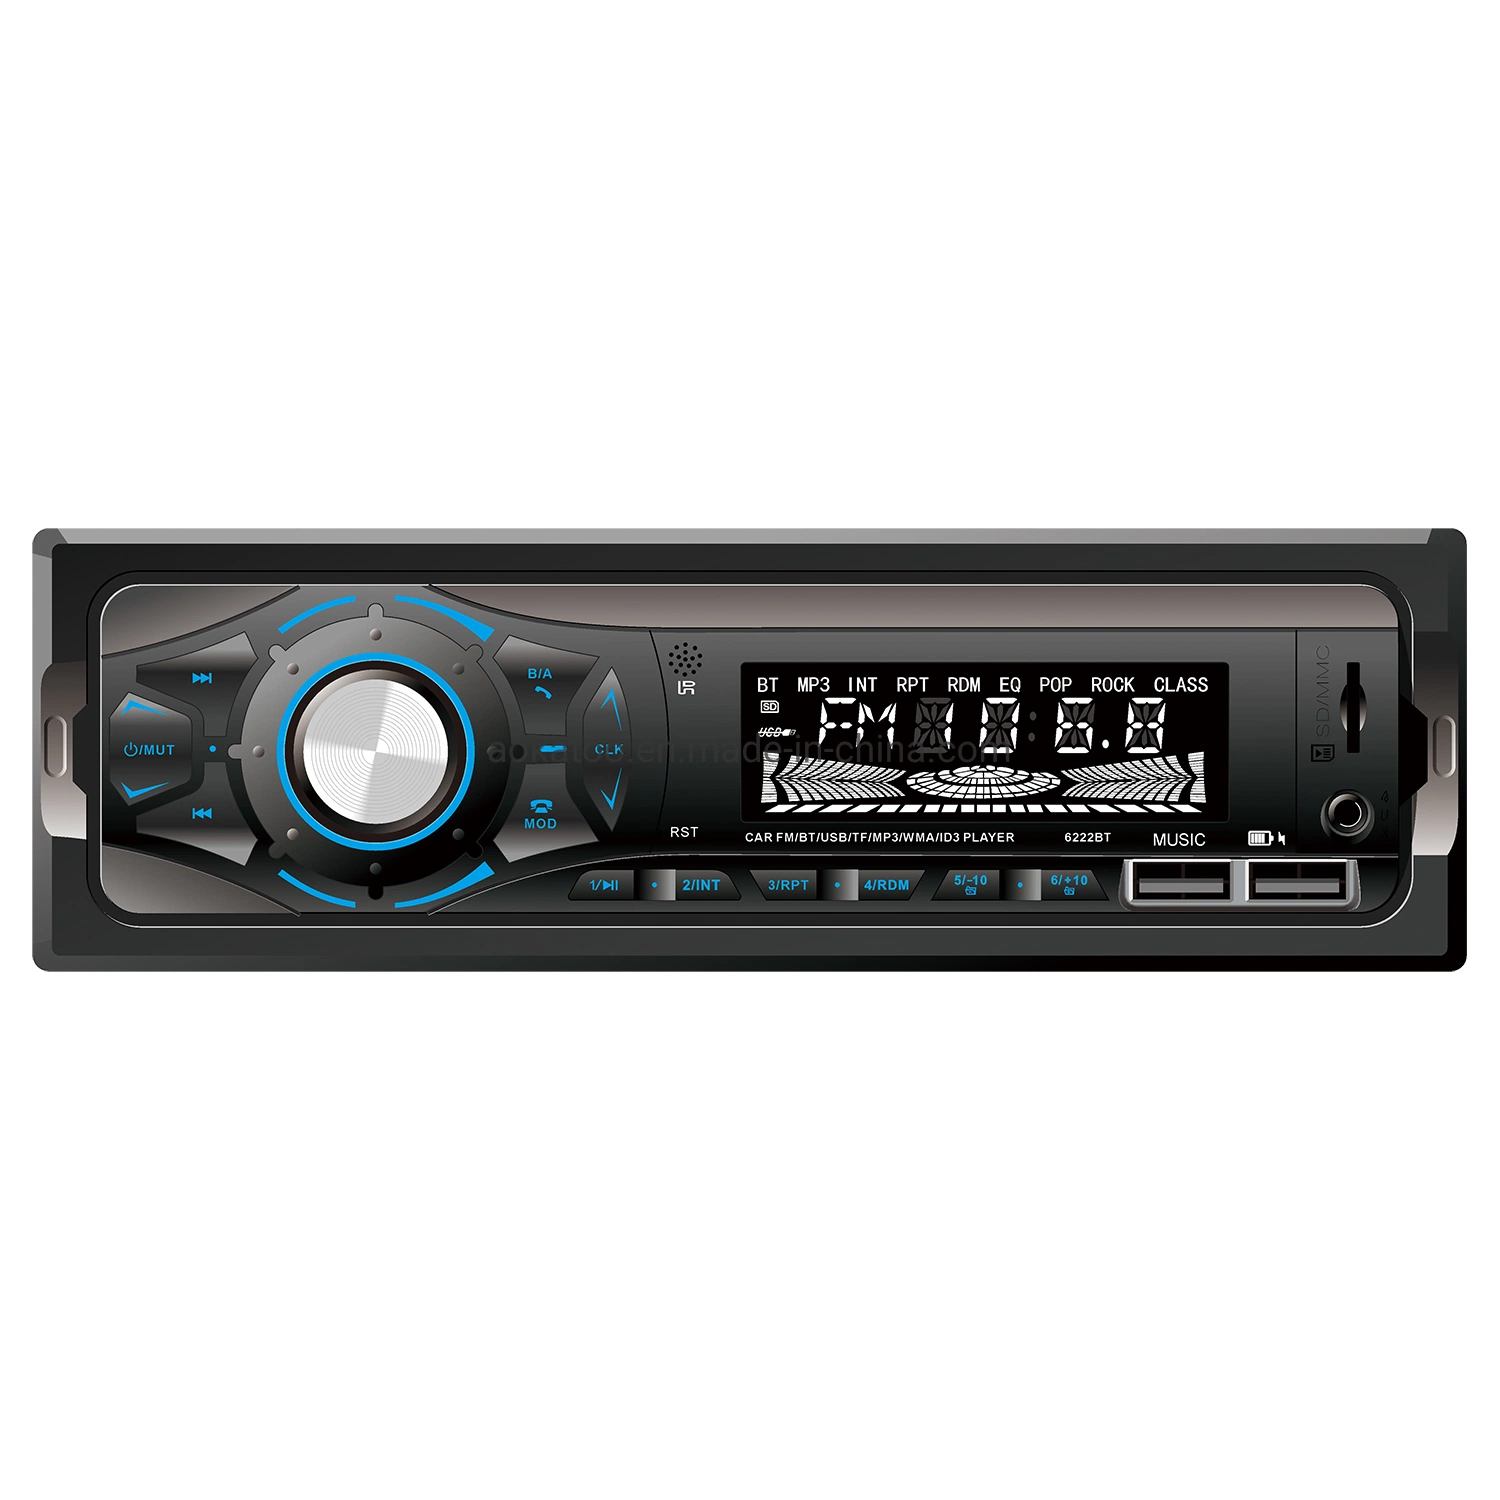 Car Transmitter Car Radio with USB MP3 Player